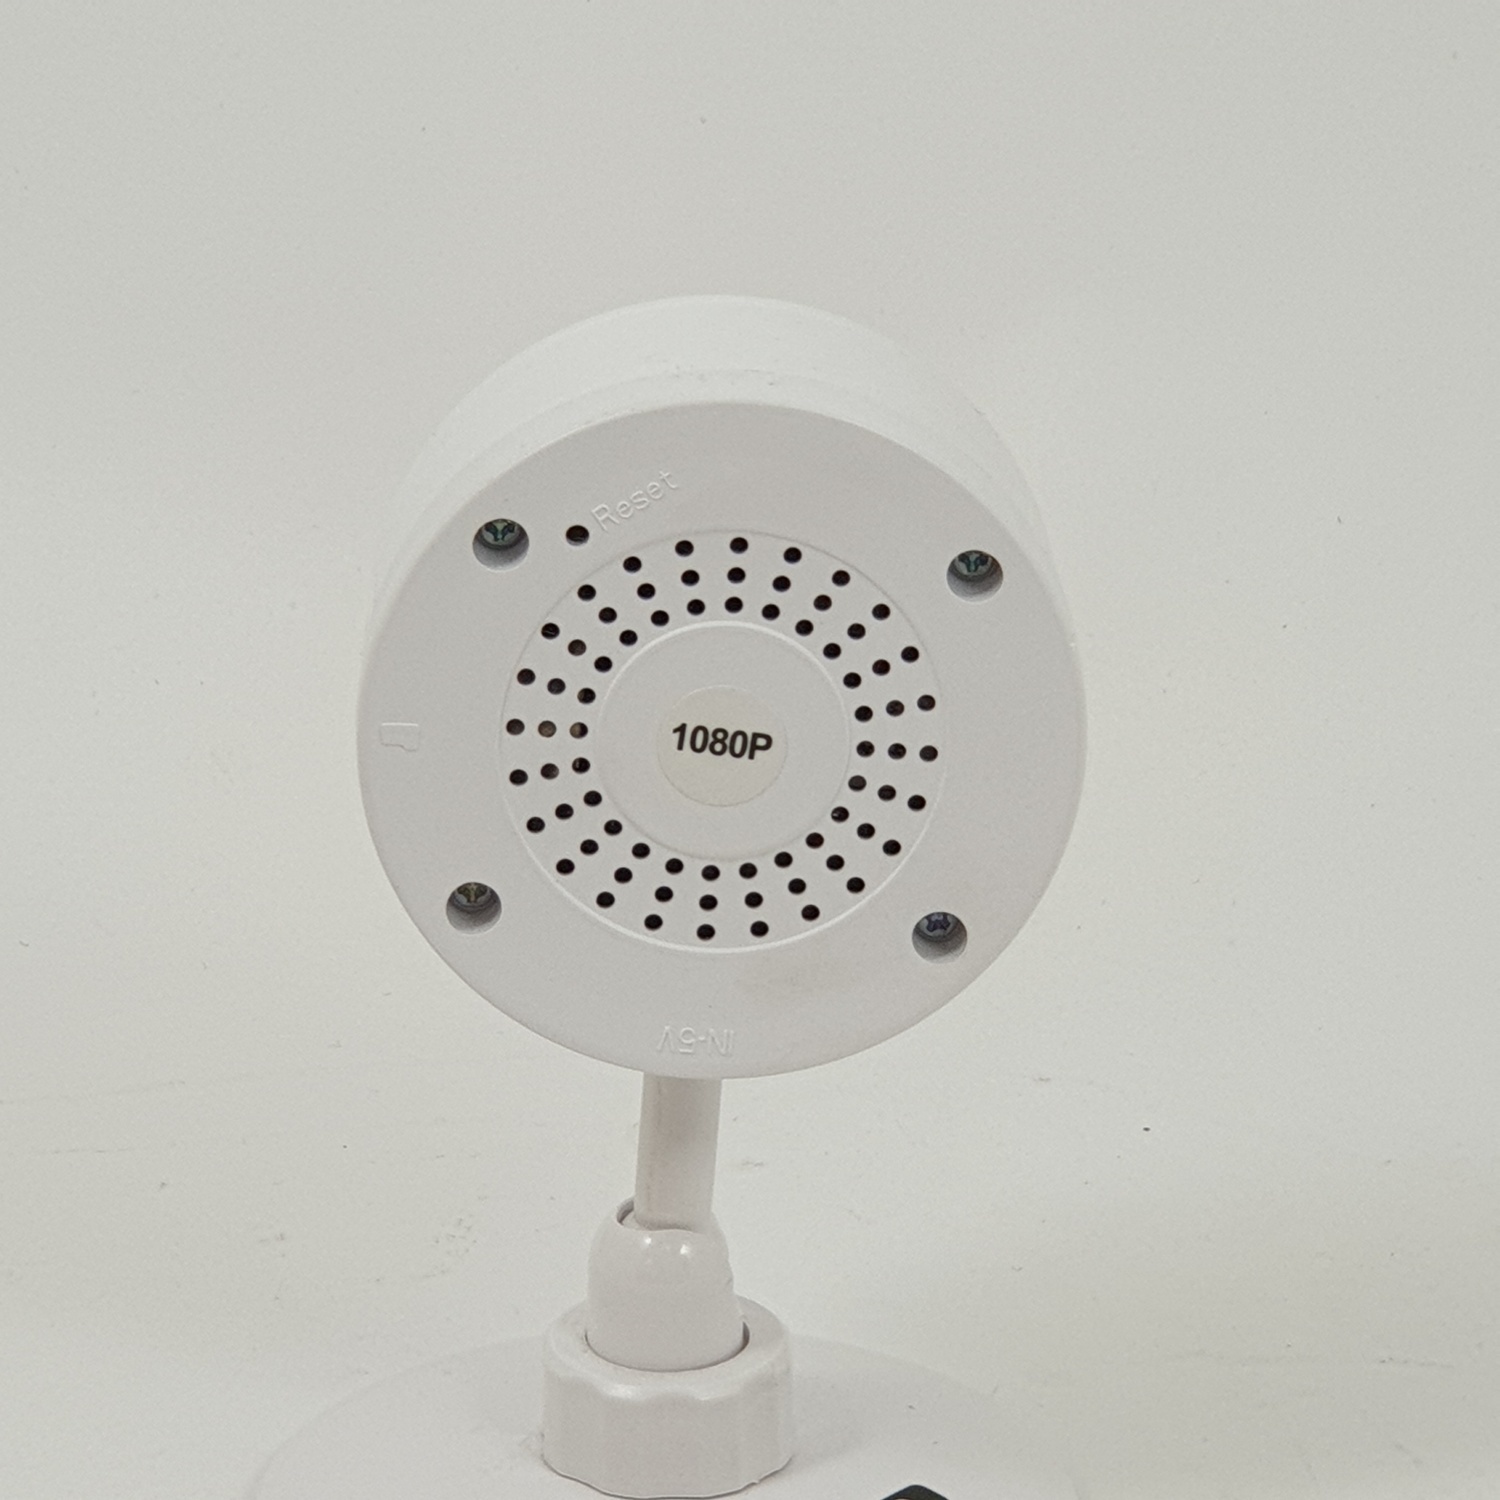 Luma Connect กล้องวงจรปิด Wifi รุ่น TA-R9420-R2 สีขาว